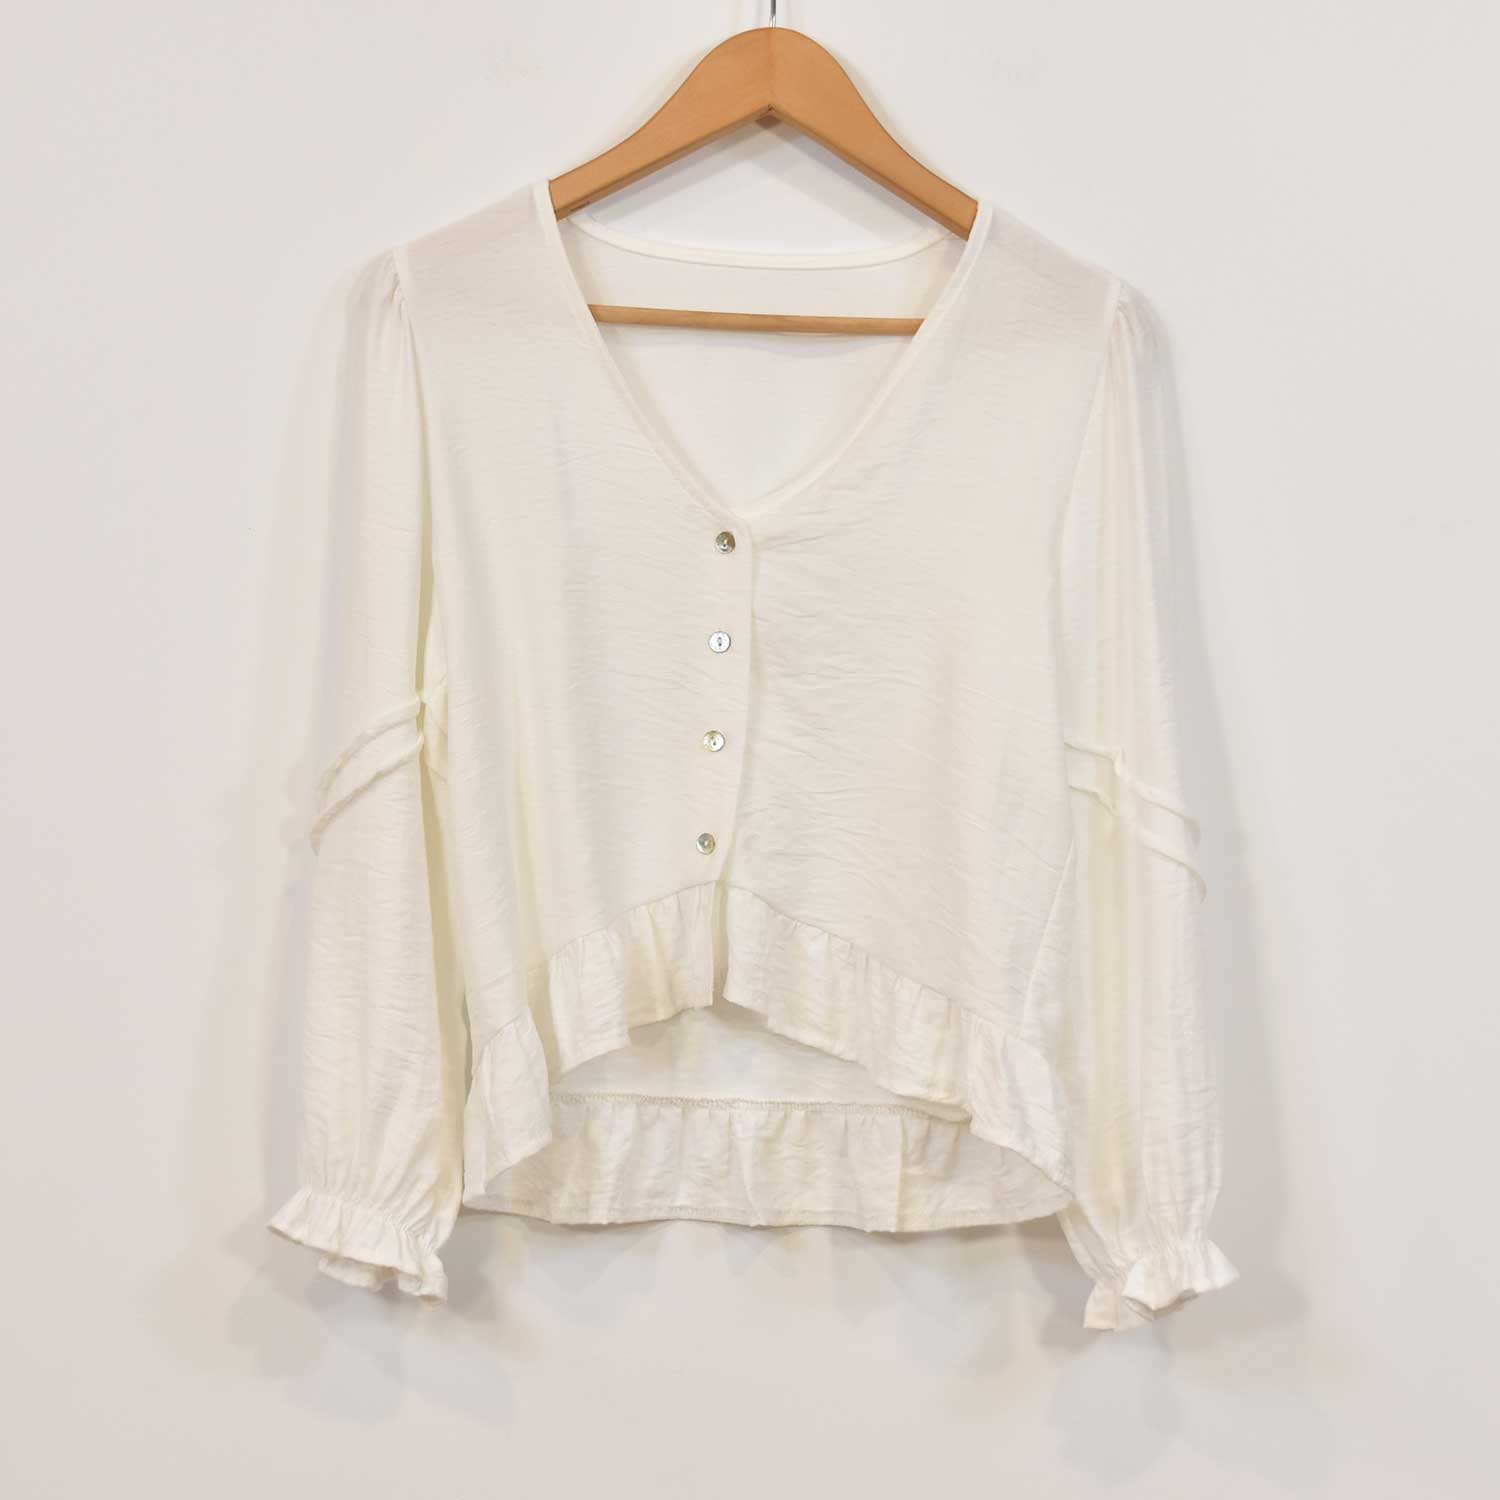 White ruffle blouse